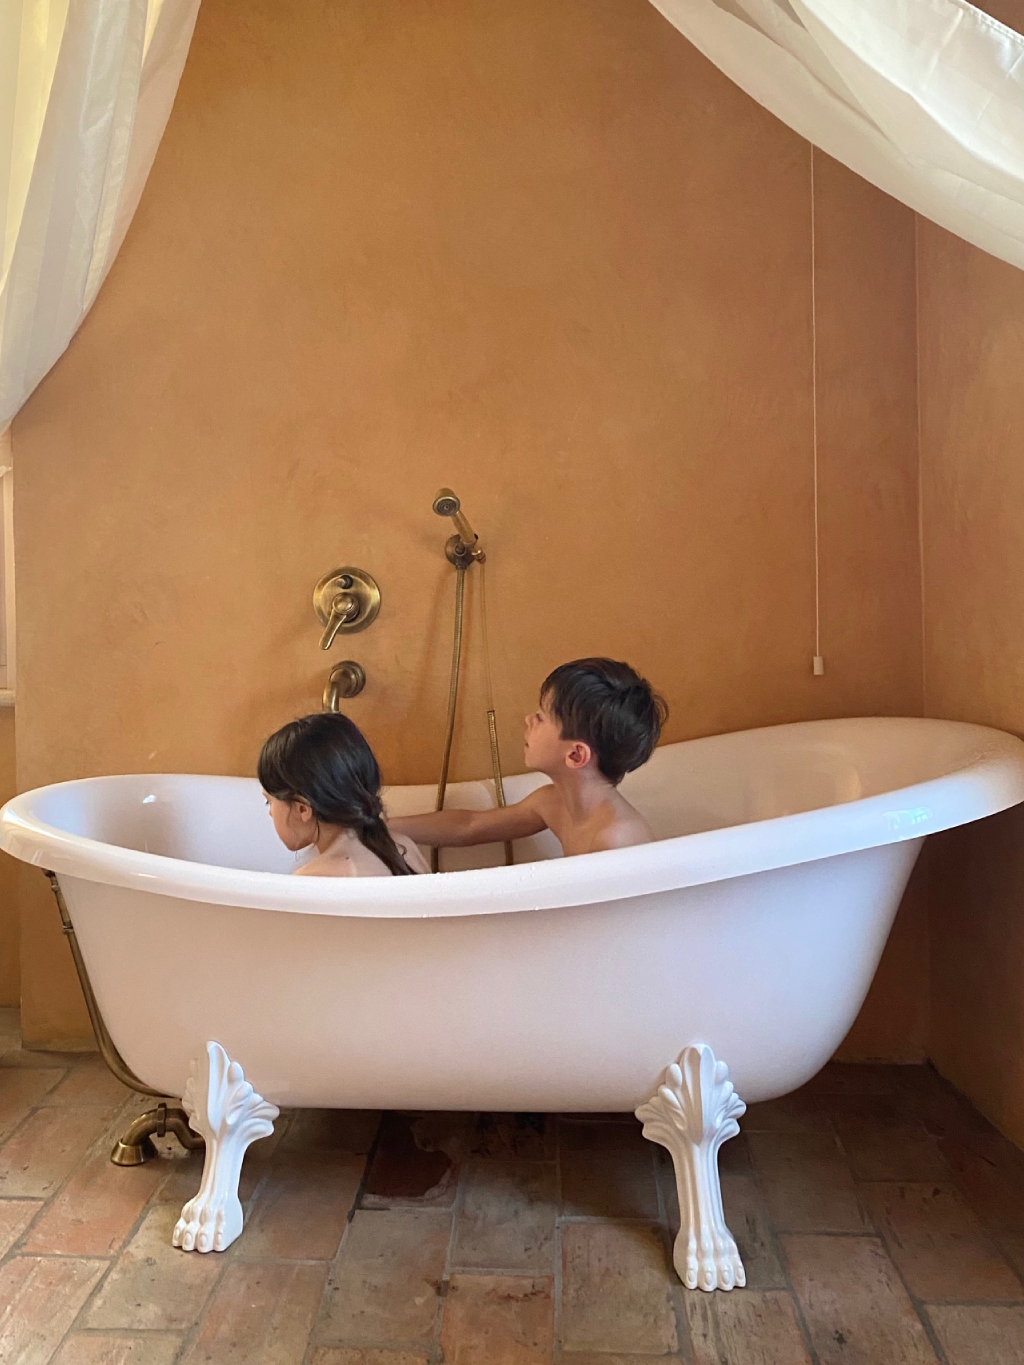 olivia and antonio in the bath